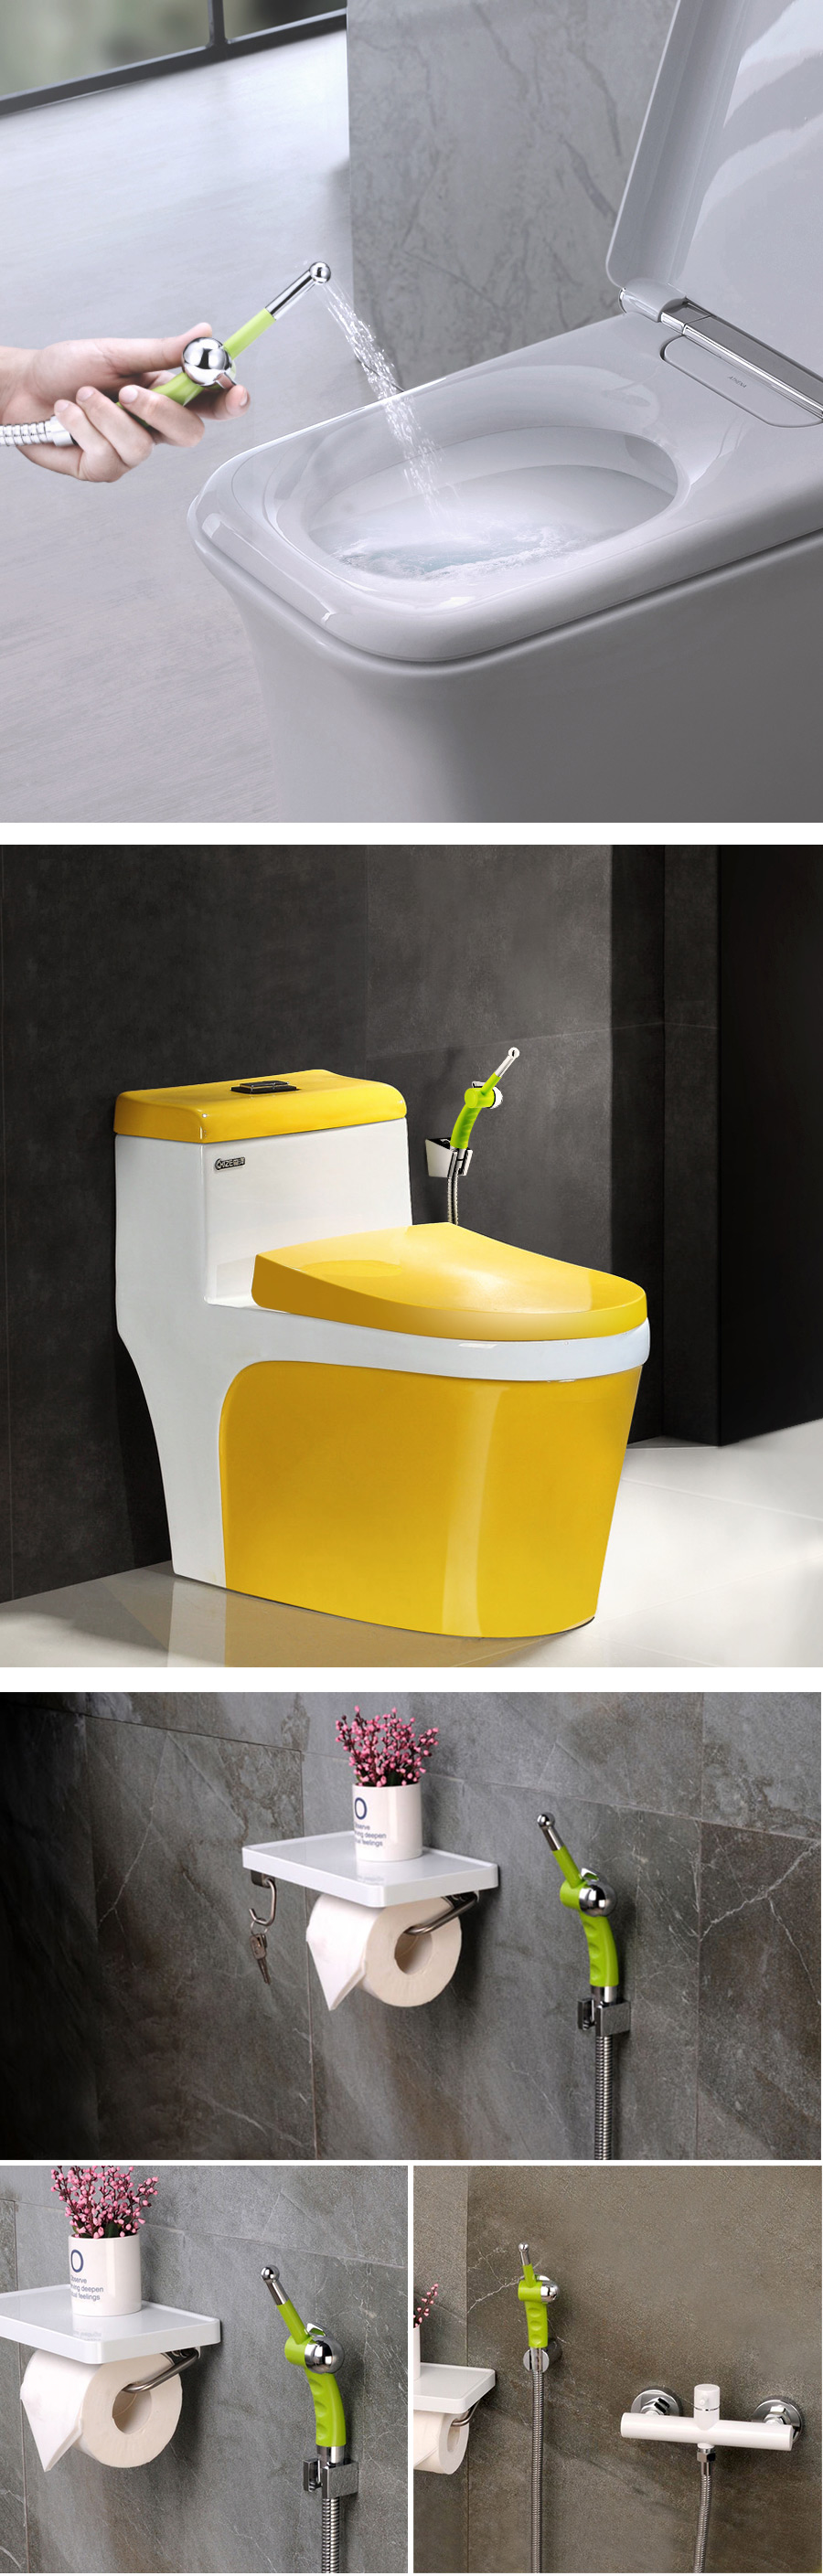 KCASA¿ Manual Operation Bidet Toilet Seat Shattaf Bathroom Kitchen Health Faucet